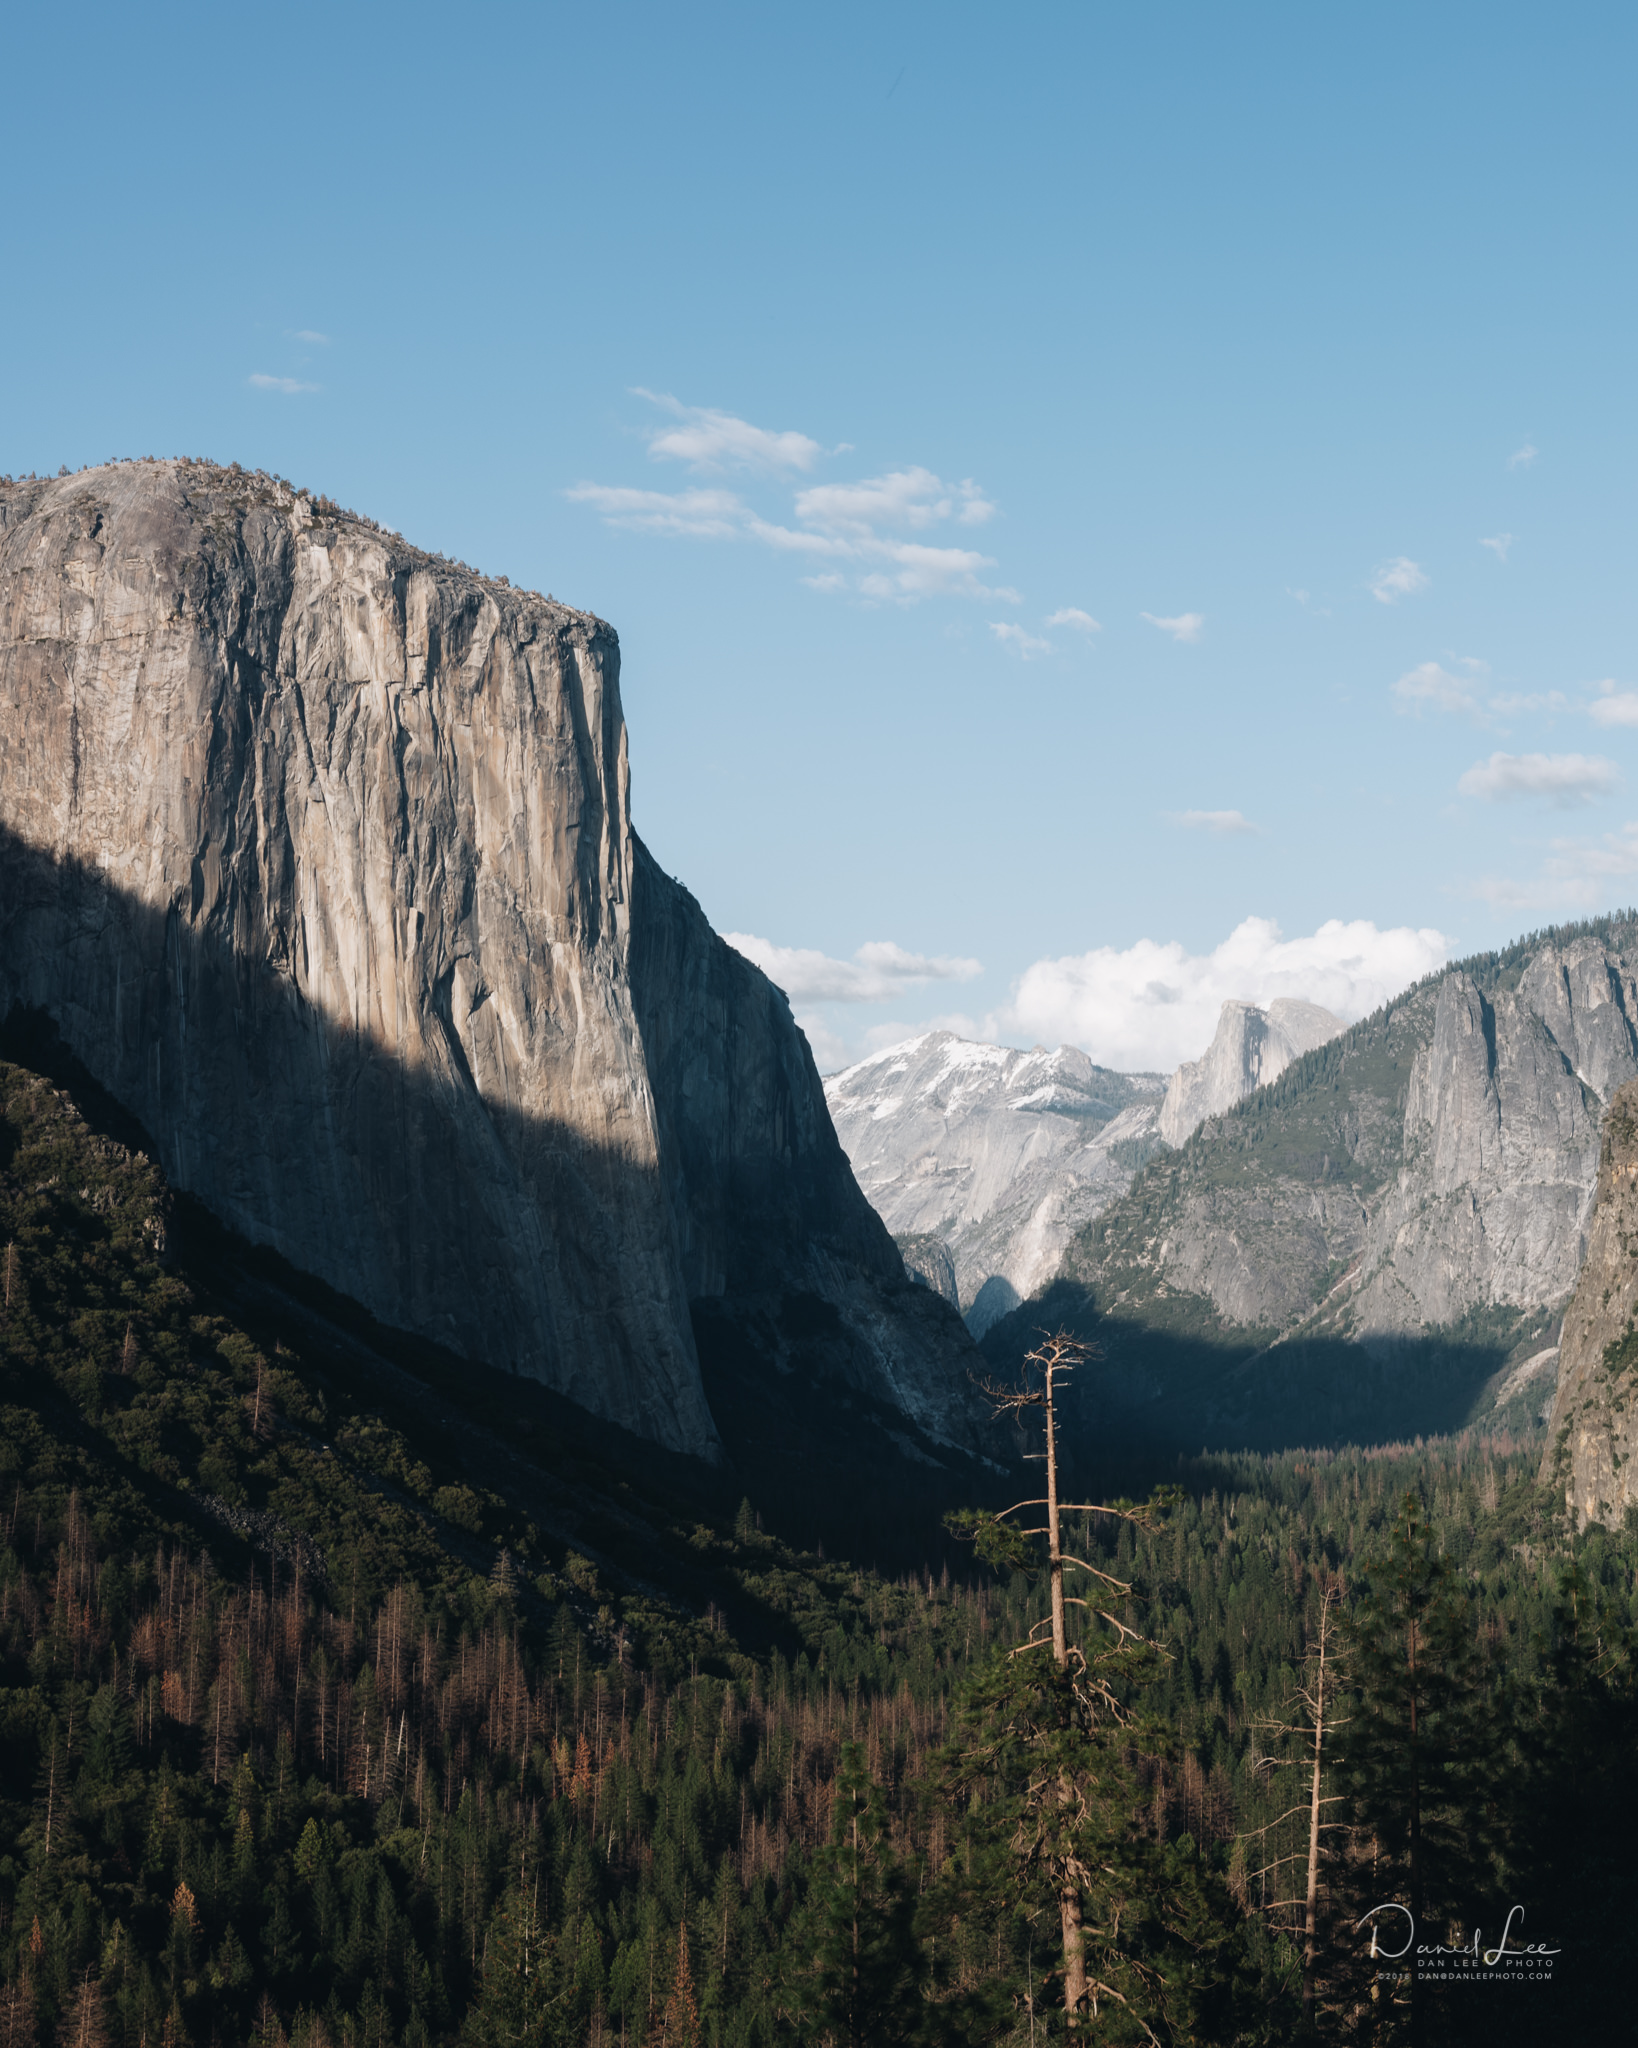  El Capitan in Yosemite National Park. For Pursuits with Enterprise. Photo by Daniel Lee. 